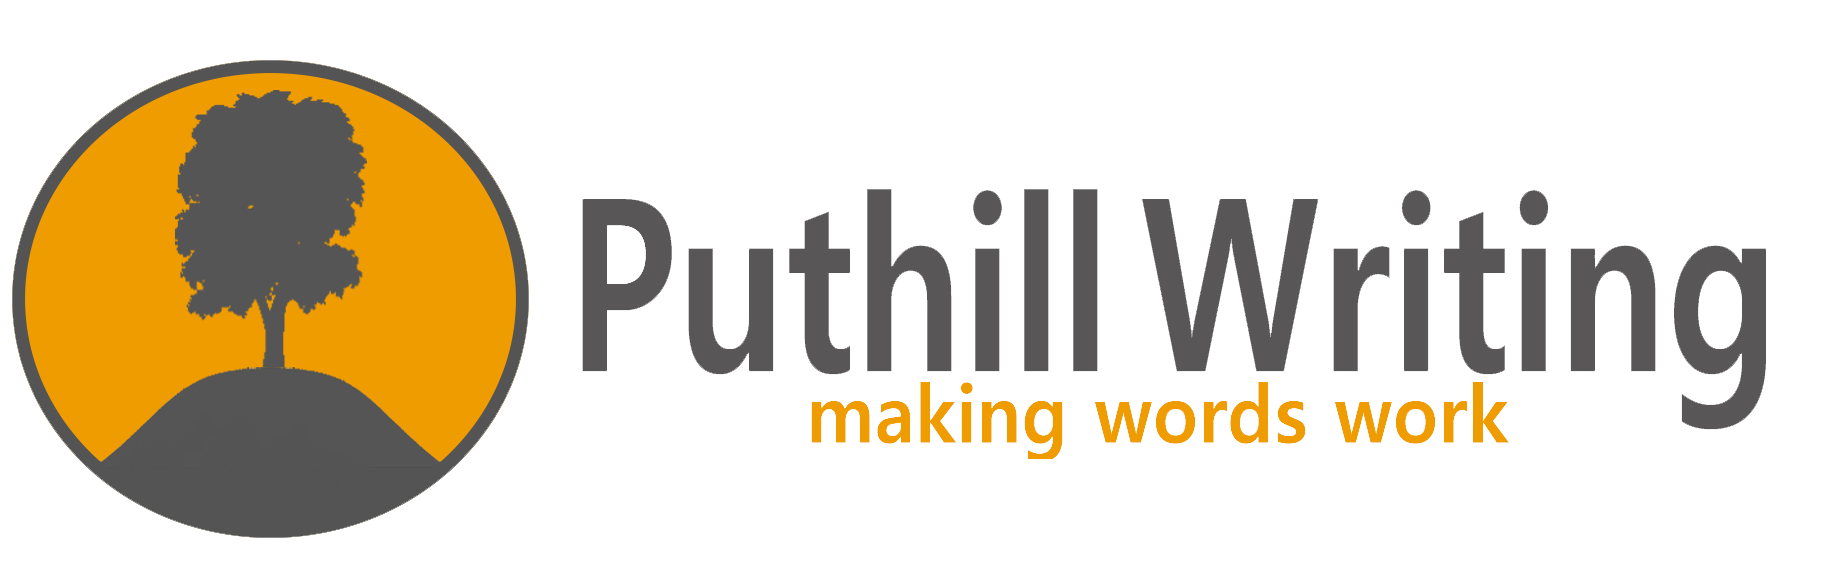 Puthill Writing